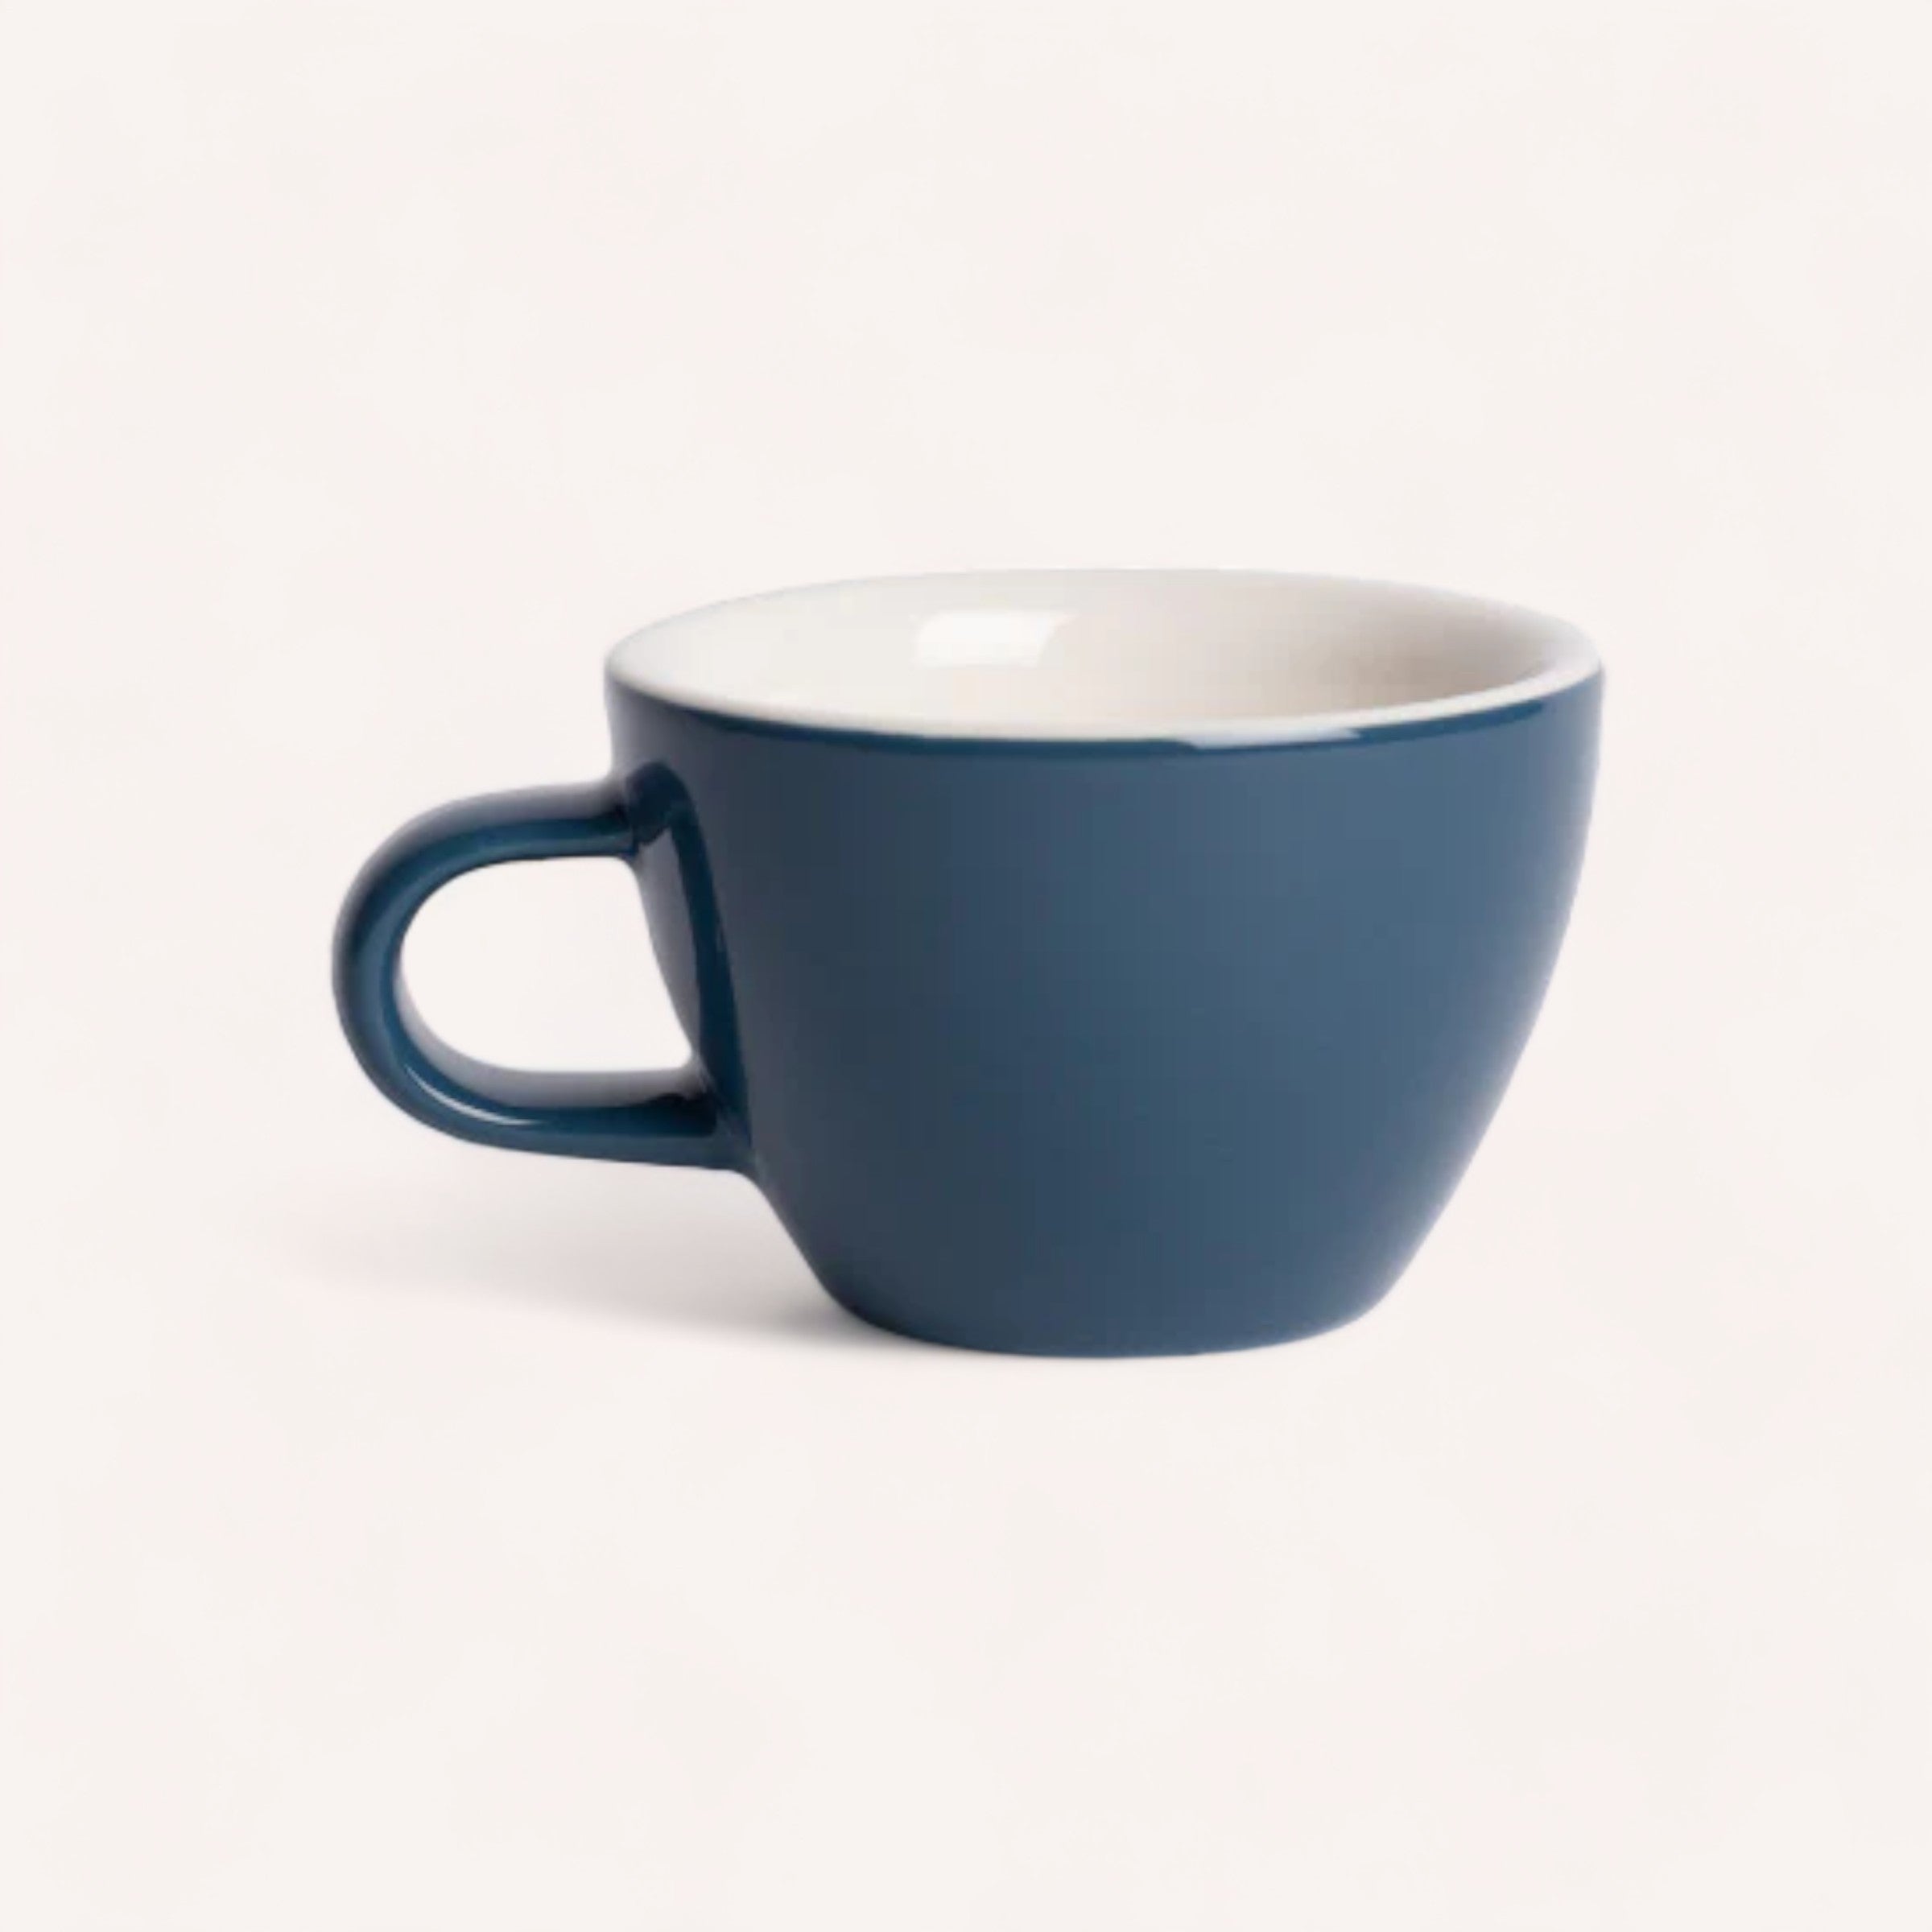 A simple blue giftbox co. Coffee, Anyone? ceramic mug against a white background.